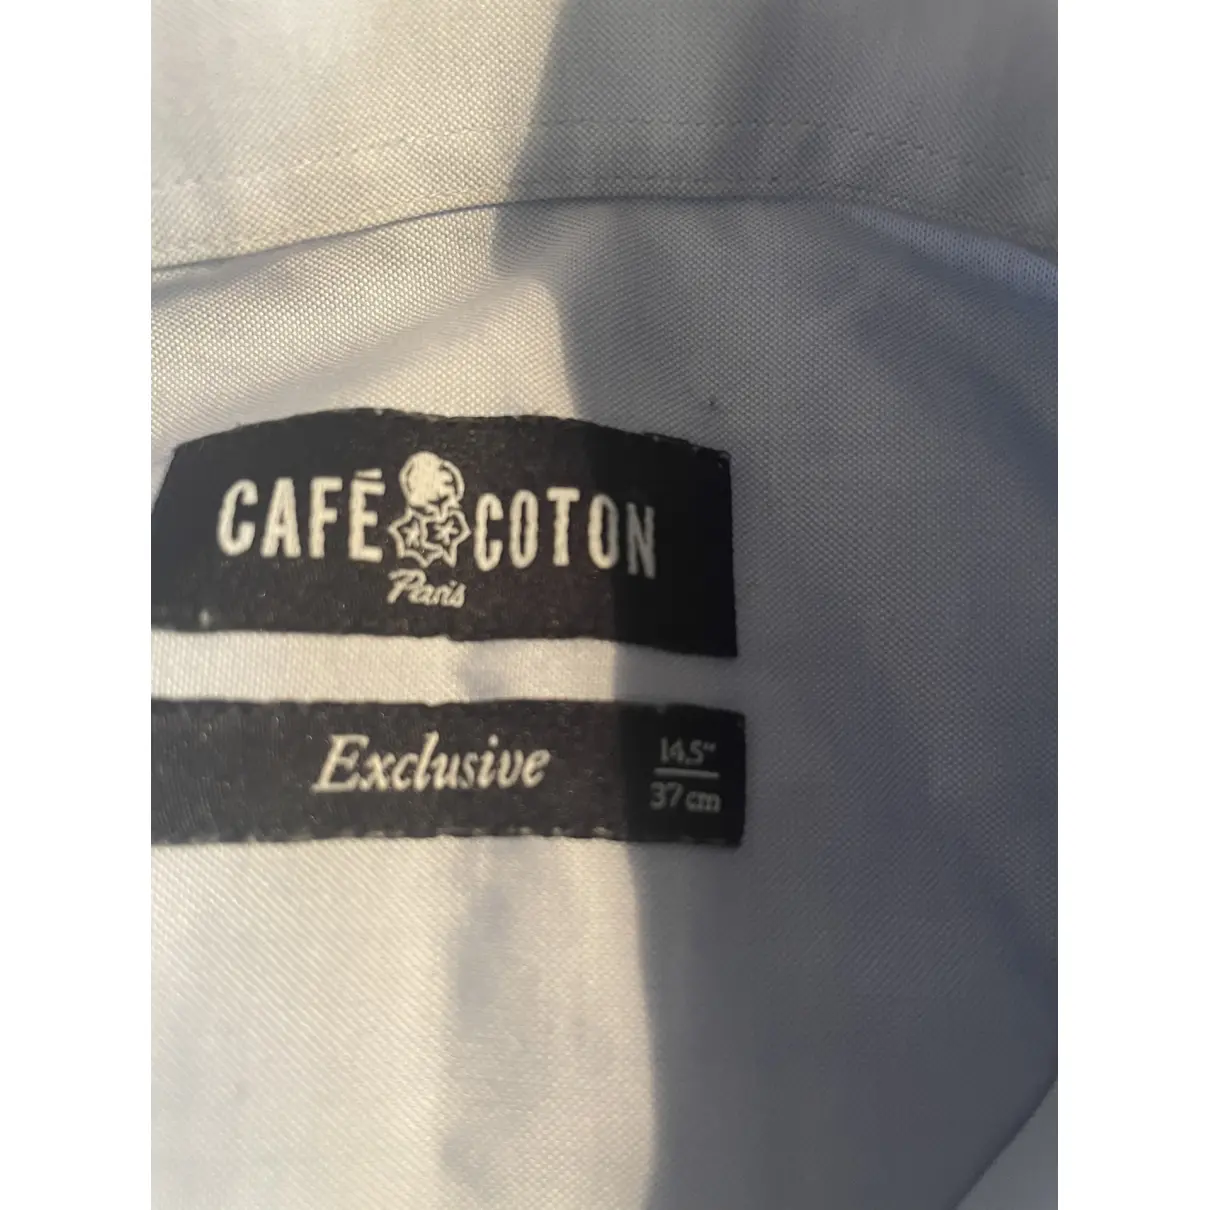 Buy CAFE COTON Shirt online